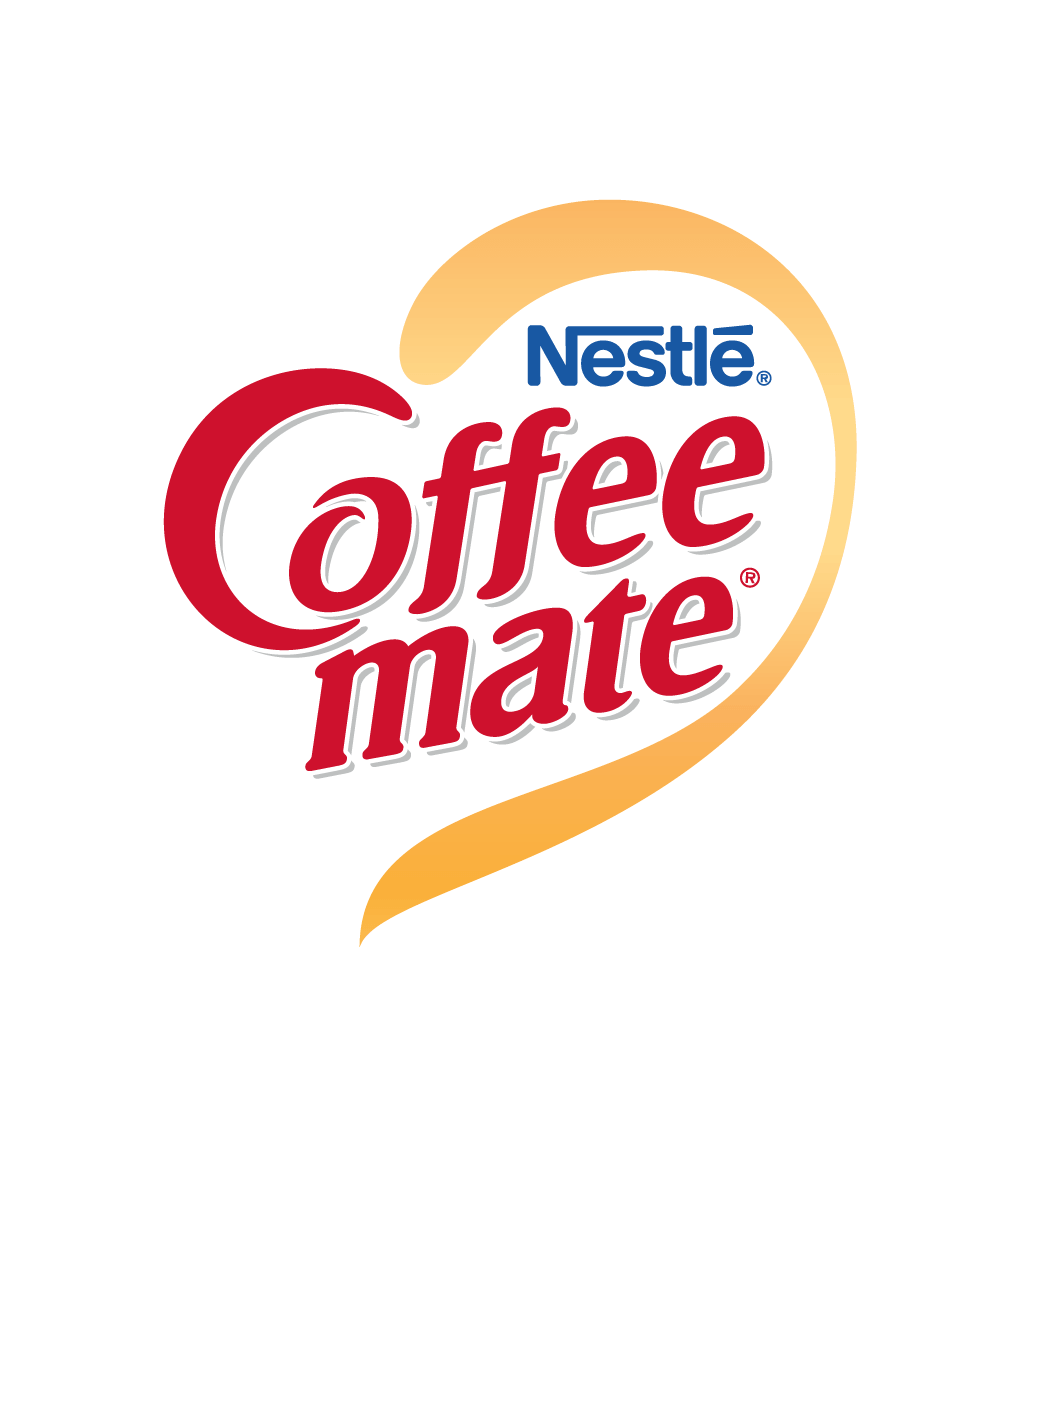 Coffee-mate Logo - Coffee Creamer. Coffee mate®